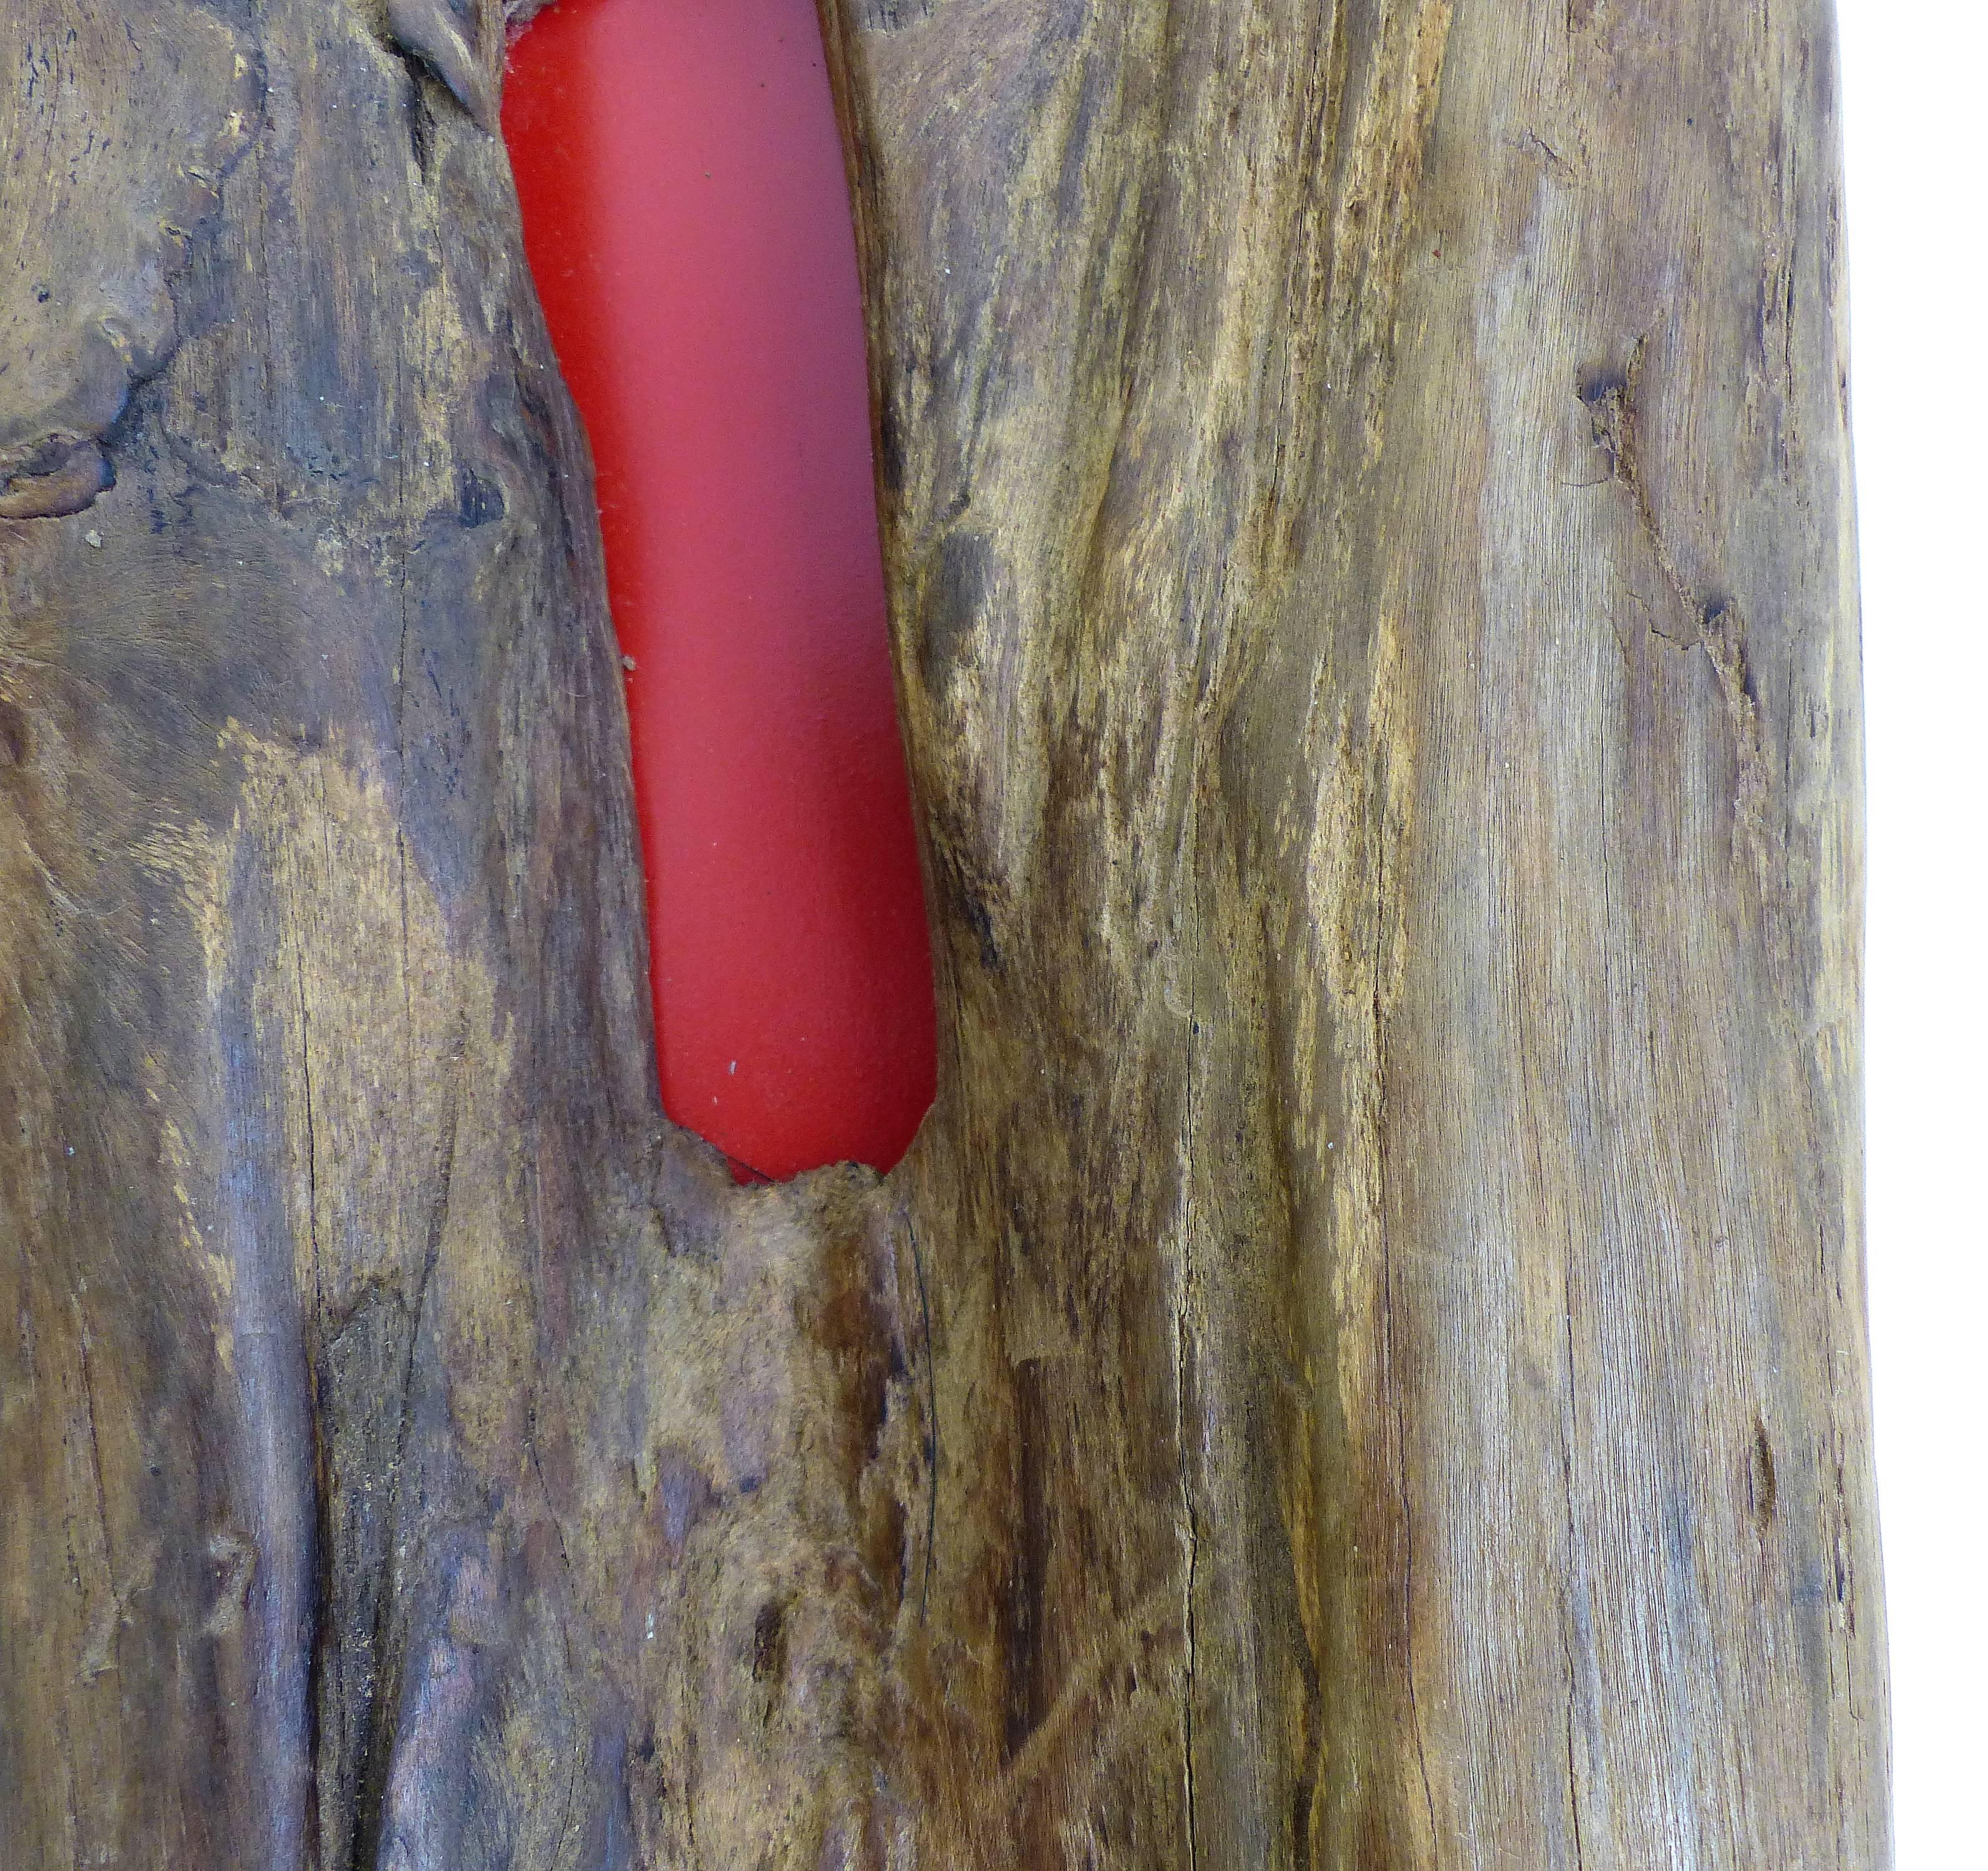 Pair of Reclaimed Wood Log Sculptures by Valeria Totti 1